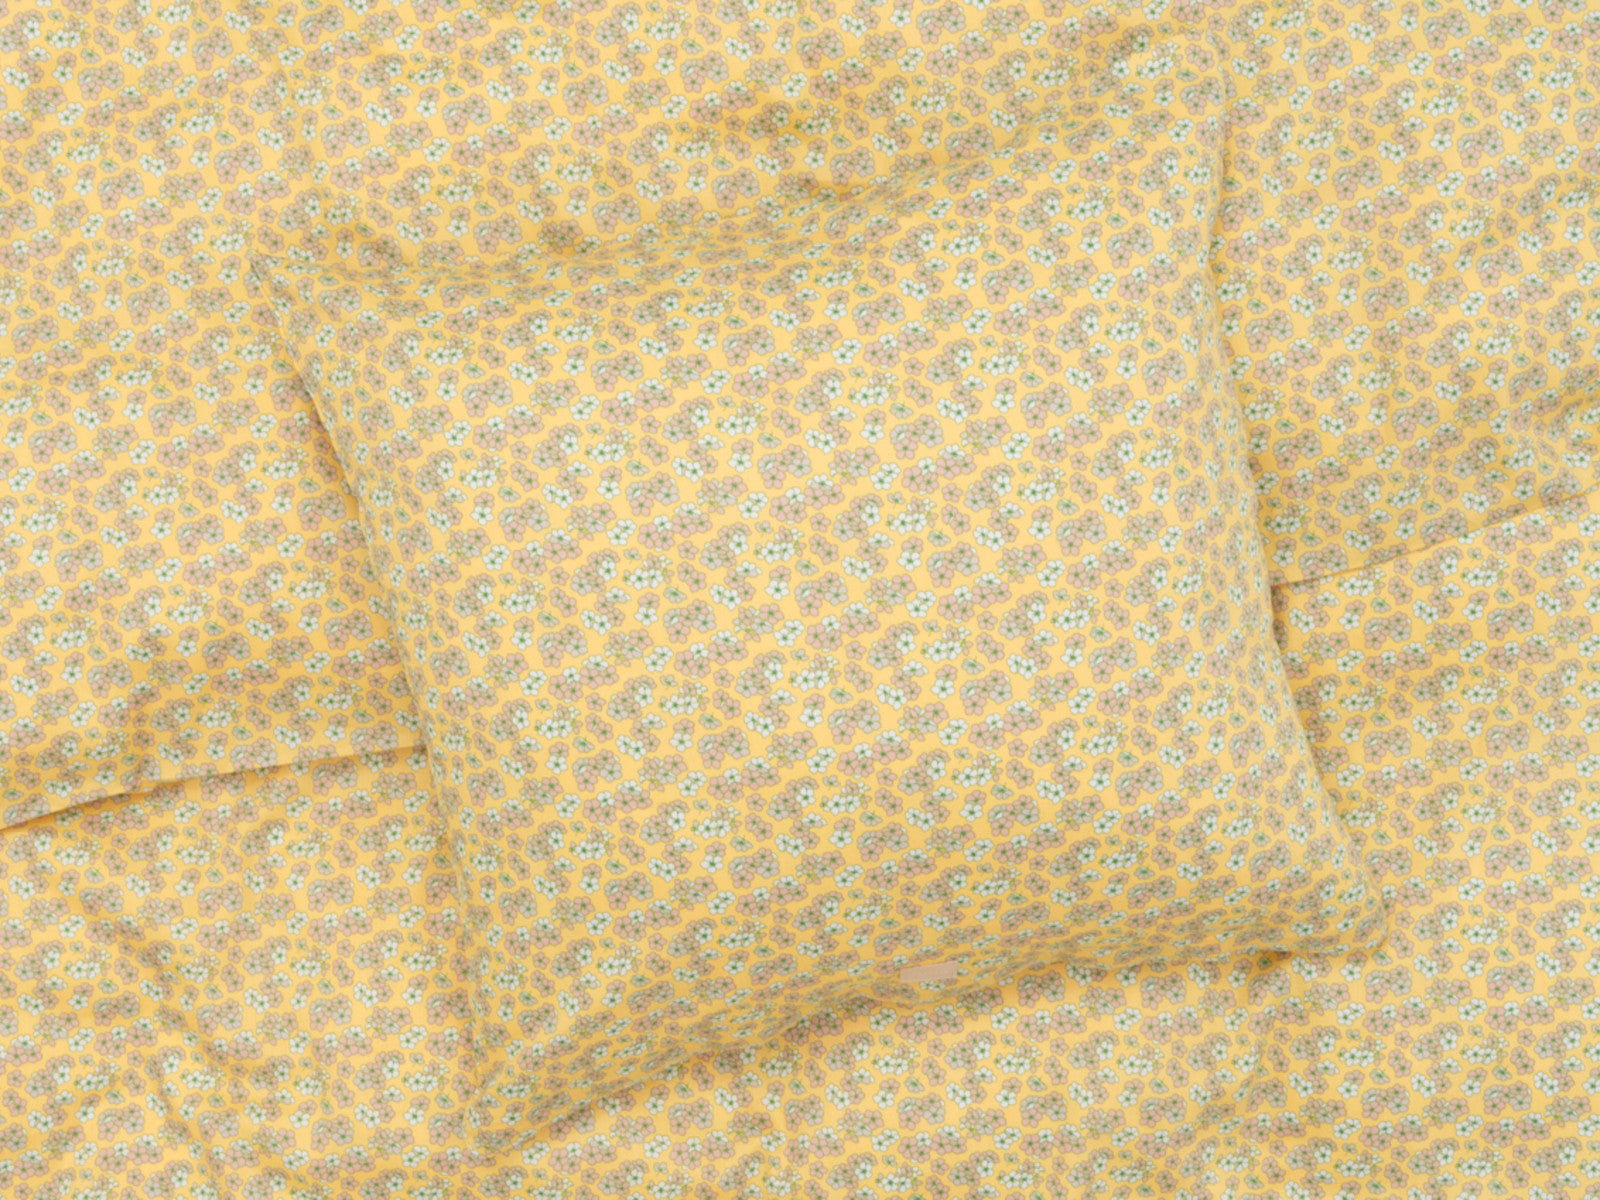 Juna sengetøj Pleasantly gul 140x200cm